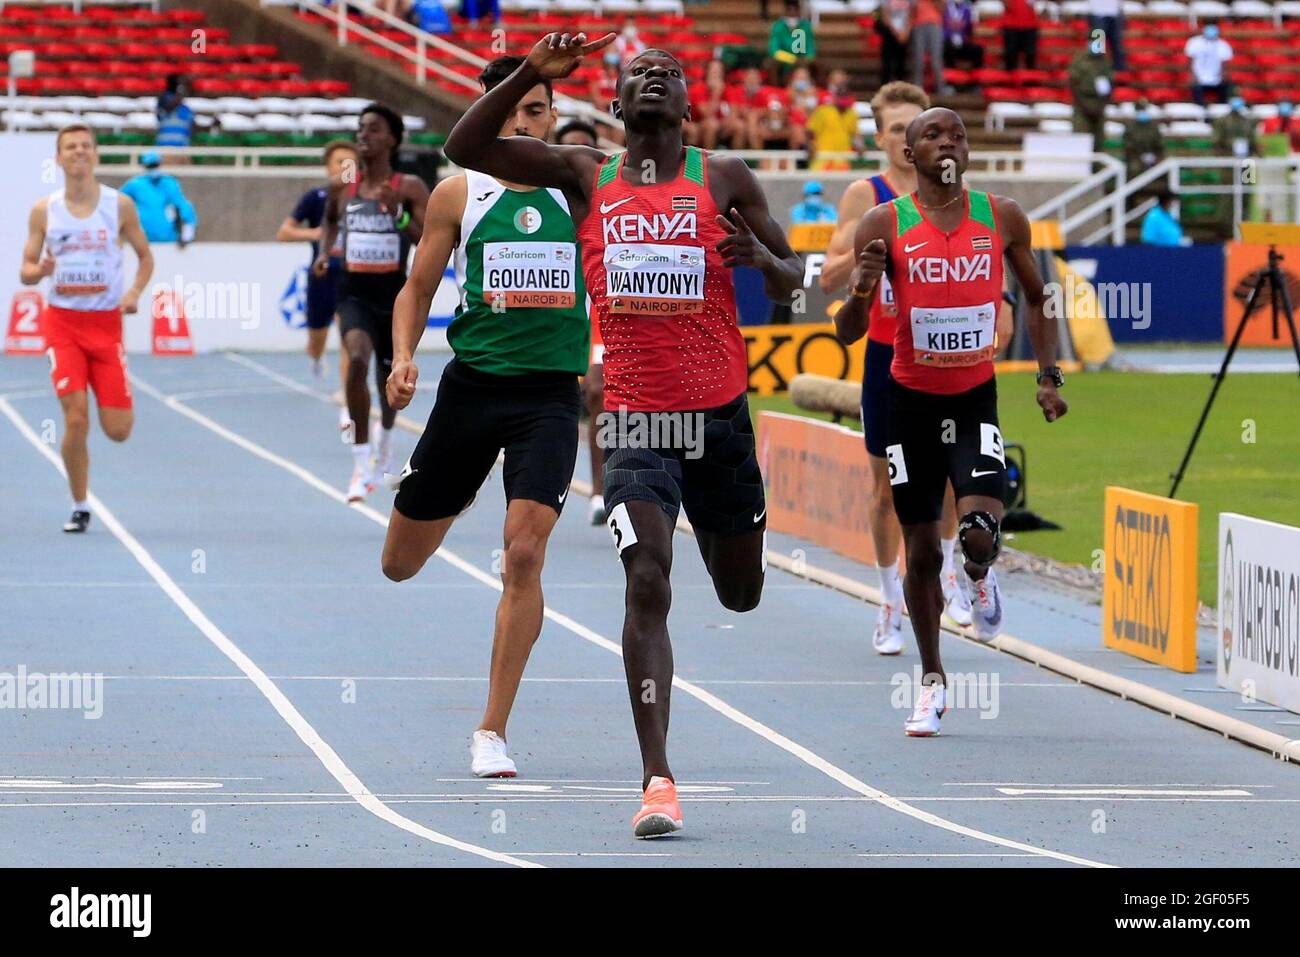 Athletics - 2021 World Athletics U20 Championships - Kenya's Emmanuel Wanyonyi crosses the line to win in the Men's 800m Final - Kasarani Stadium, Nairobi, Kenya - August 22, 2021. REUTERS/Thomas Mukoya Stock Photo